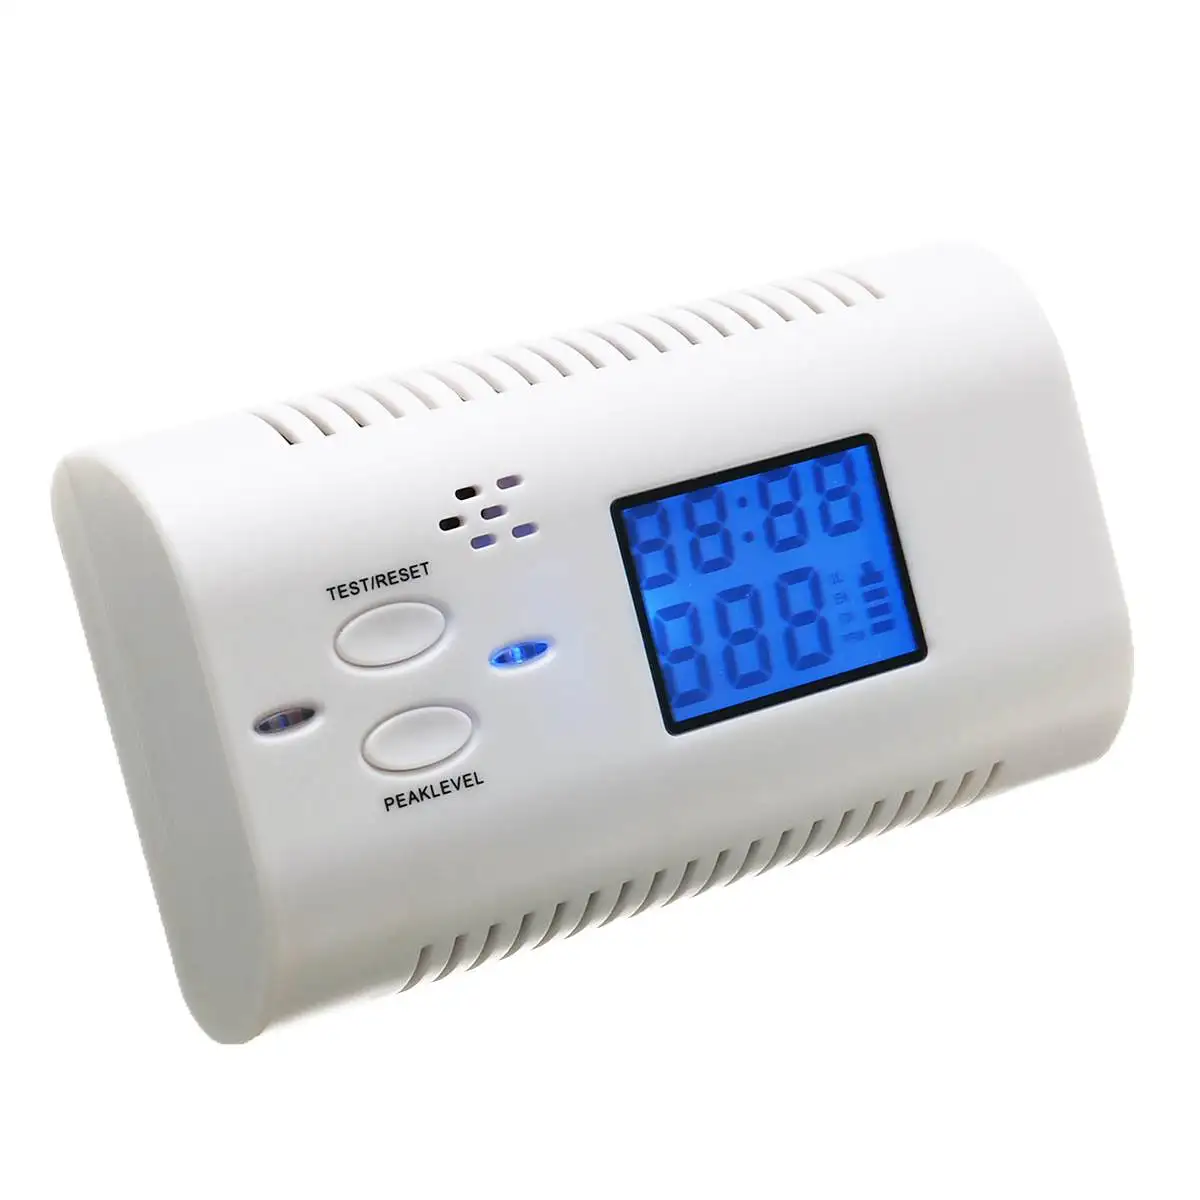 

Security Alarm Voice Carbon Monoxide Detector LCD Display Poisoning Gas Alarm Sensor Co Detector 9V Battery For Home Kitchen